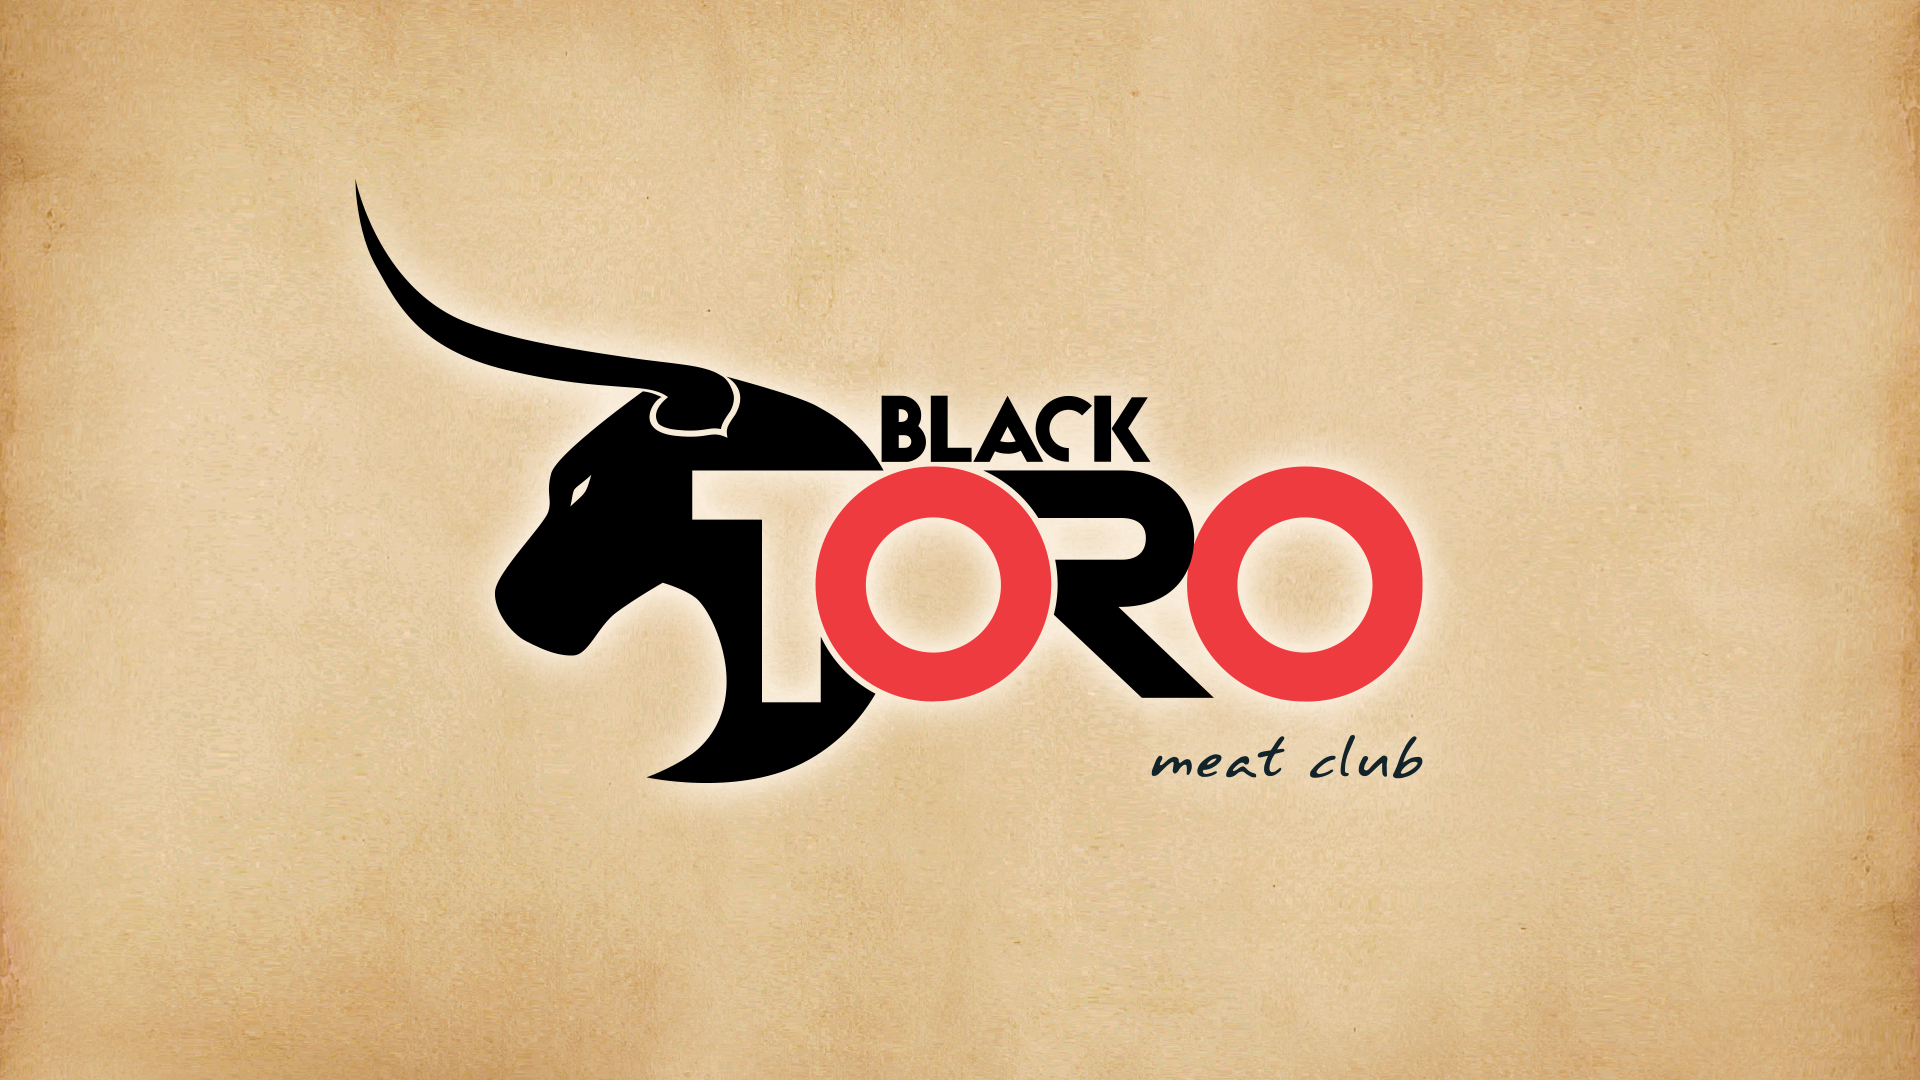 BLACK TORO MEAT CLUB LOGO